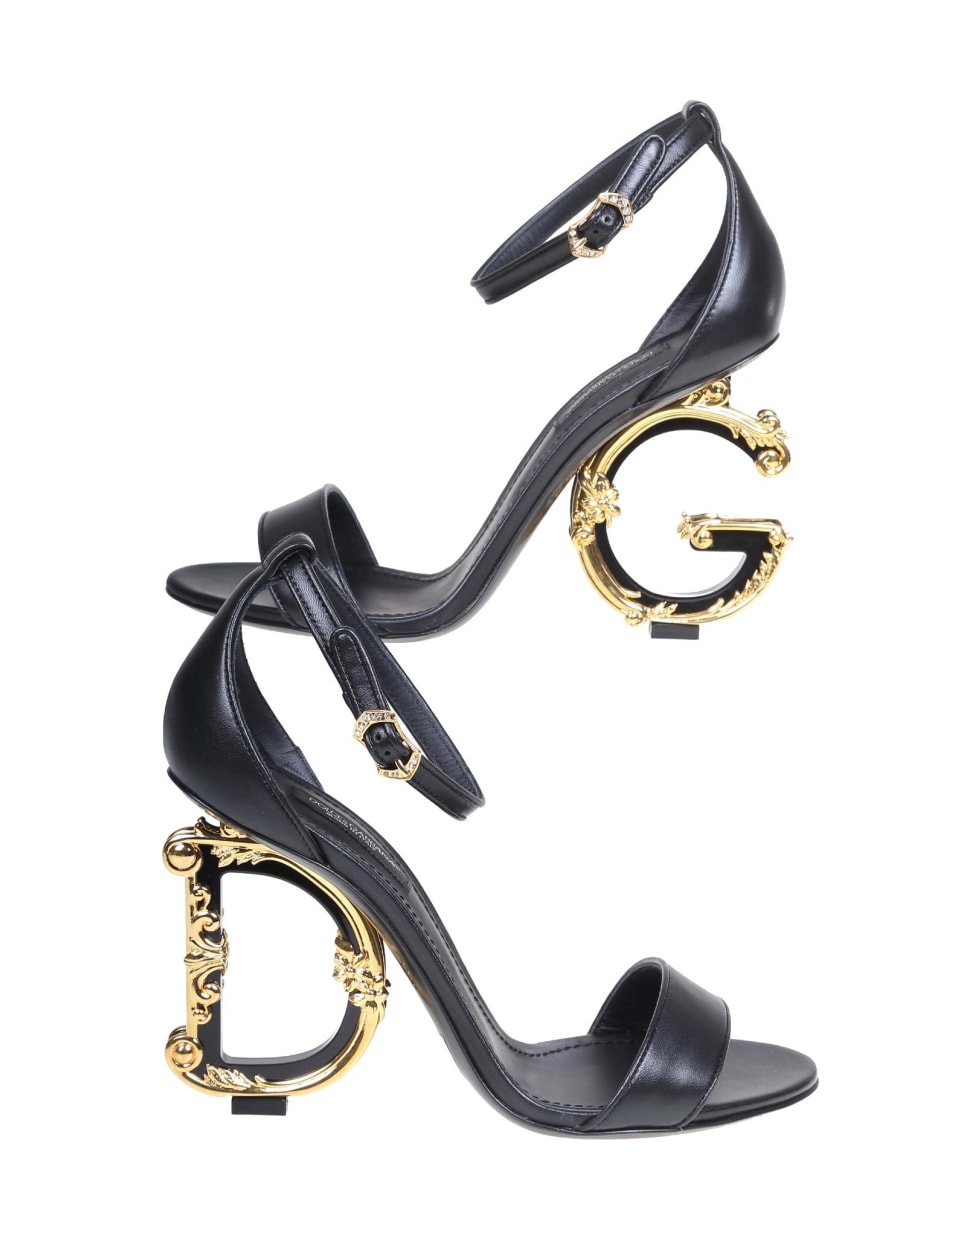 Dolce & Gabbana Devotion Sandal In Black Leather - Black